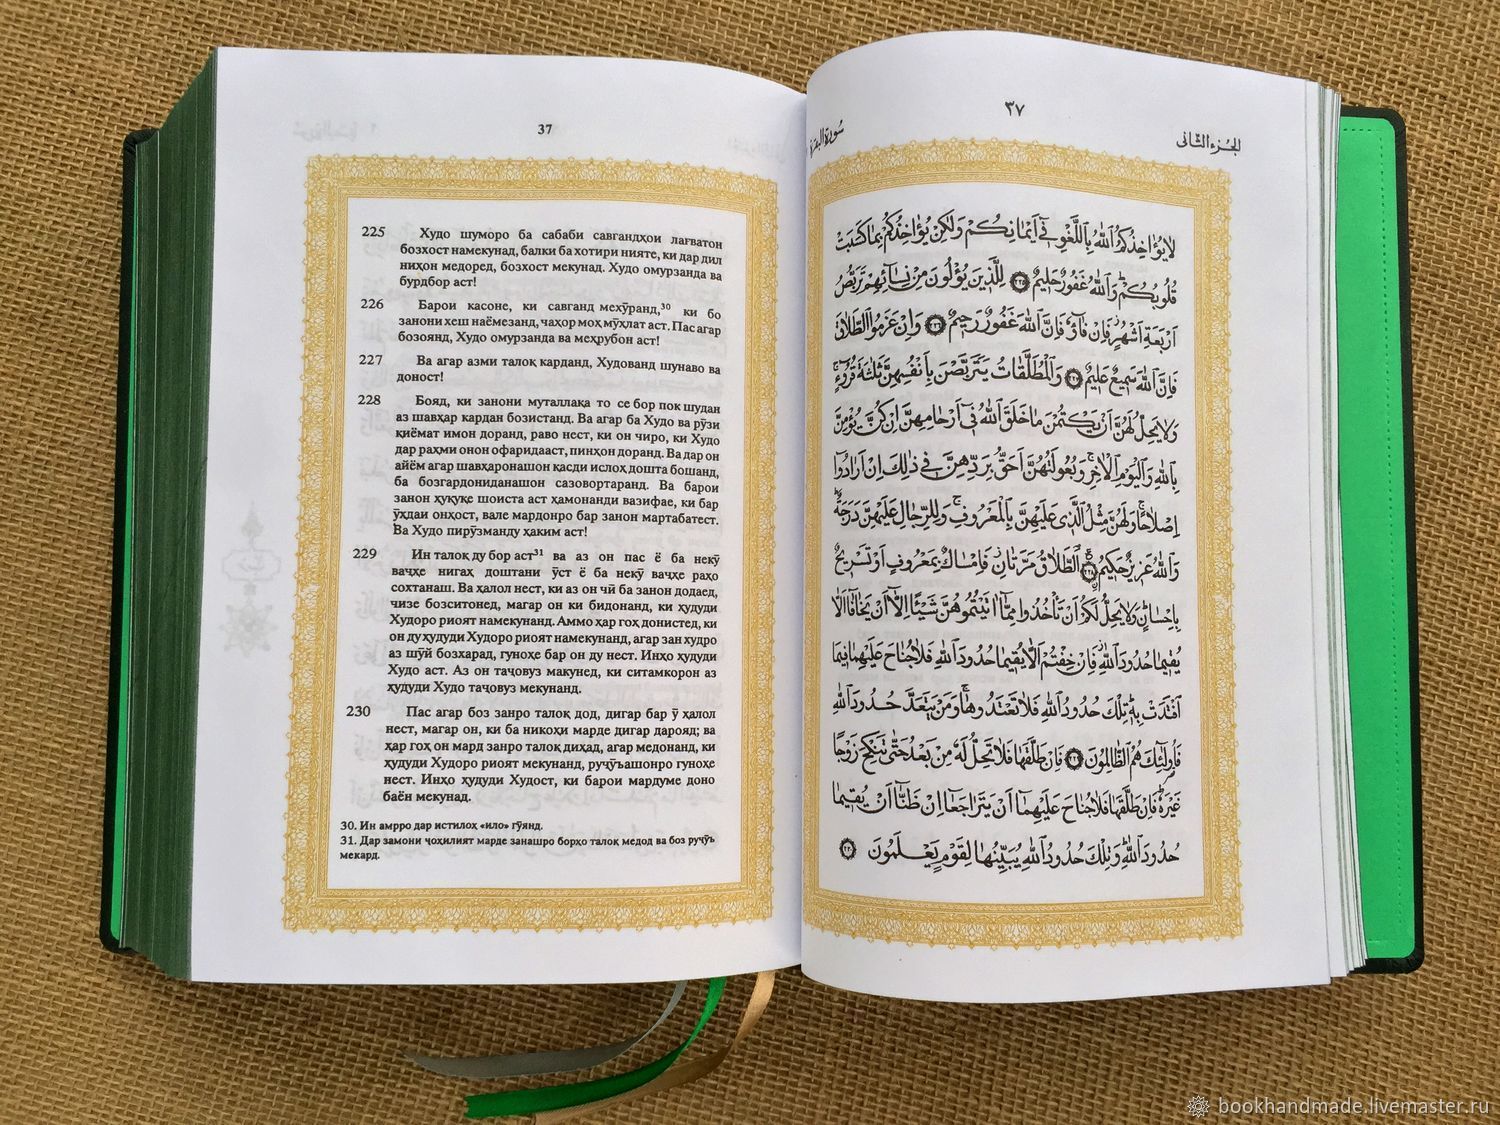 Сура таджикский читать. Книга "Коран". Книга Коран на русском языке. Книги на арабском языке. Коран книга на арабском.